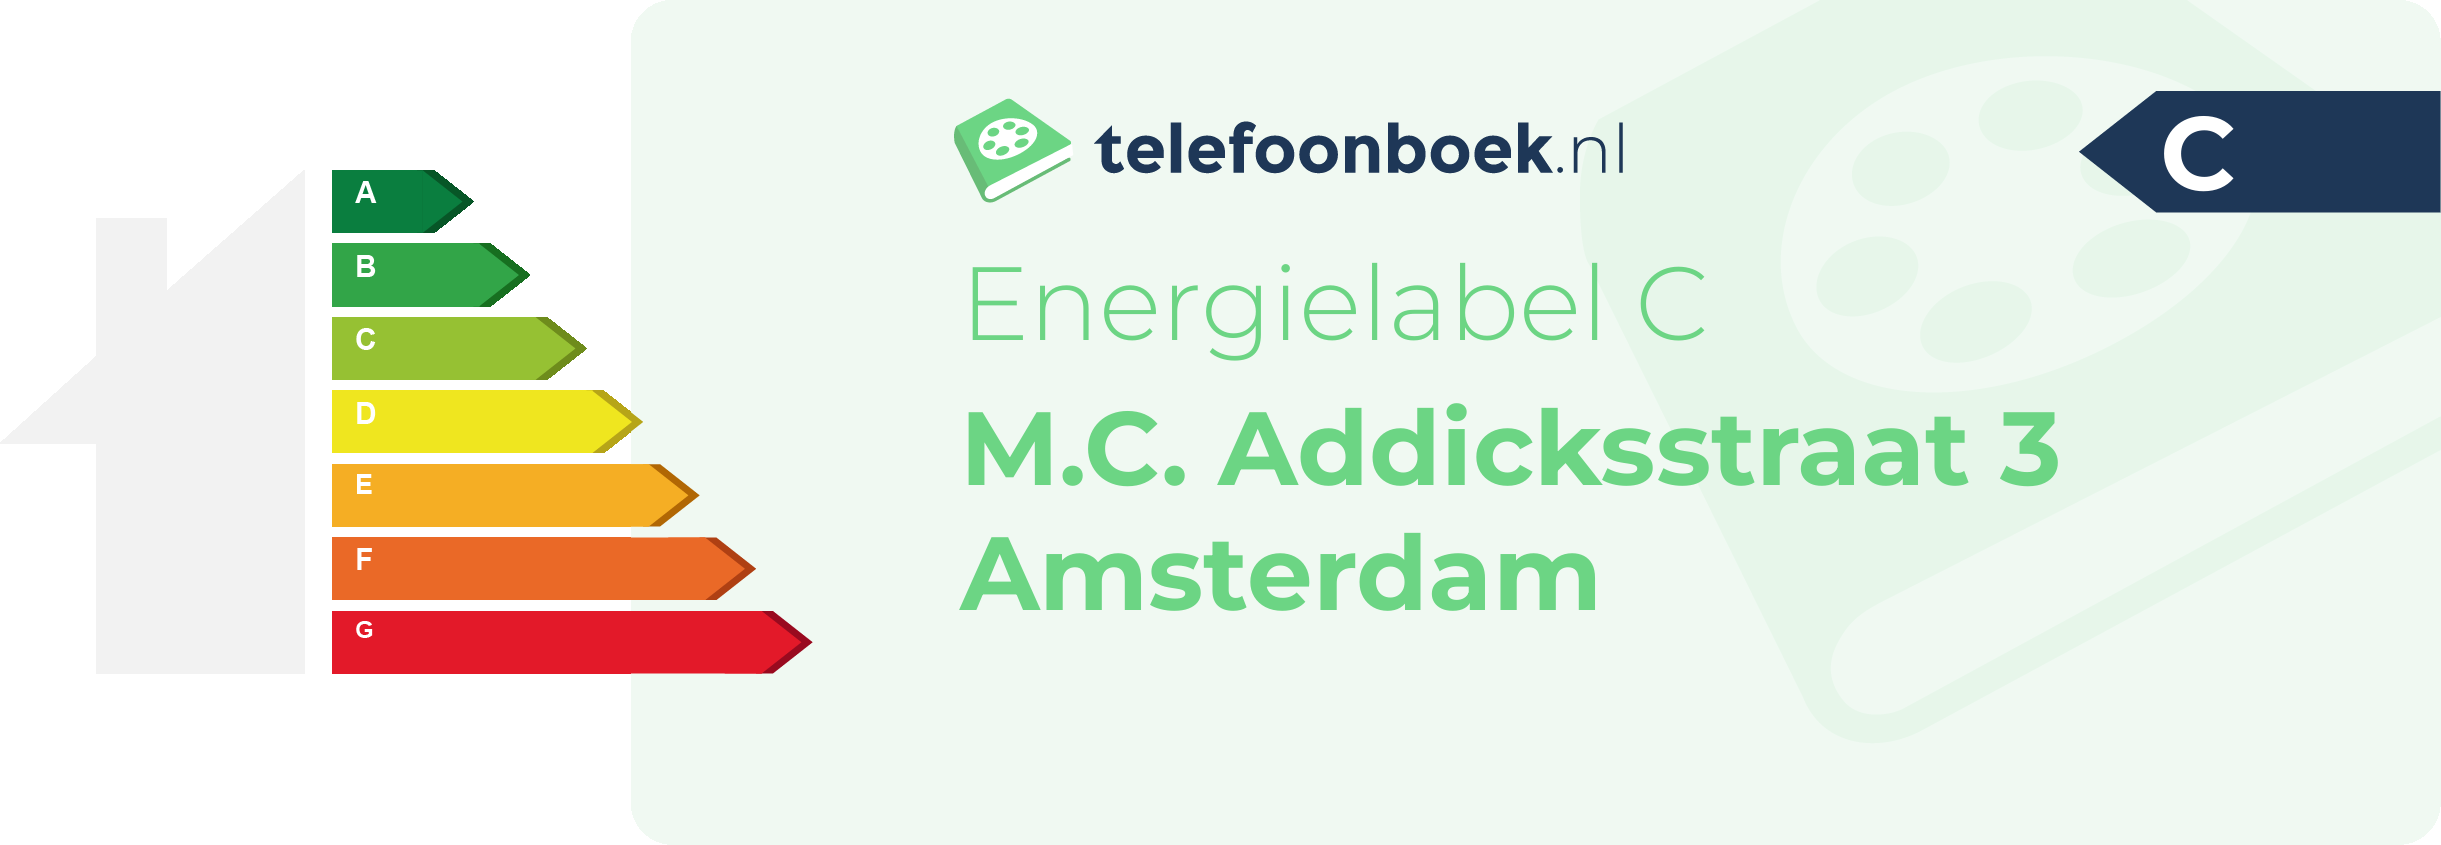 Energielabel M.C. Addicksstraat 3 Amsterdam